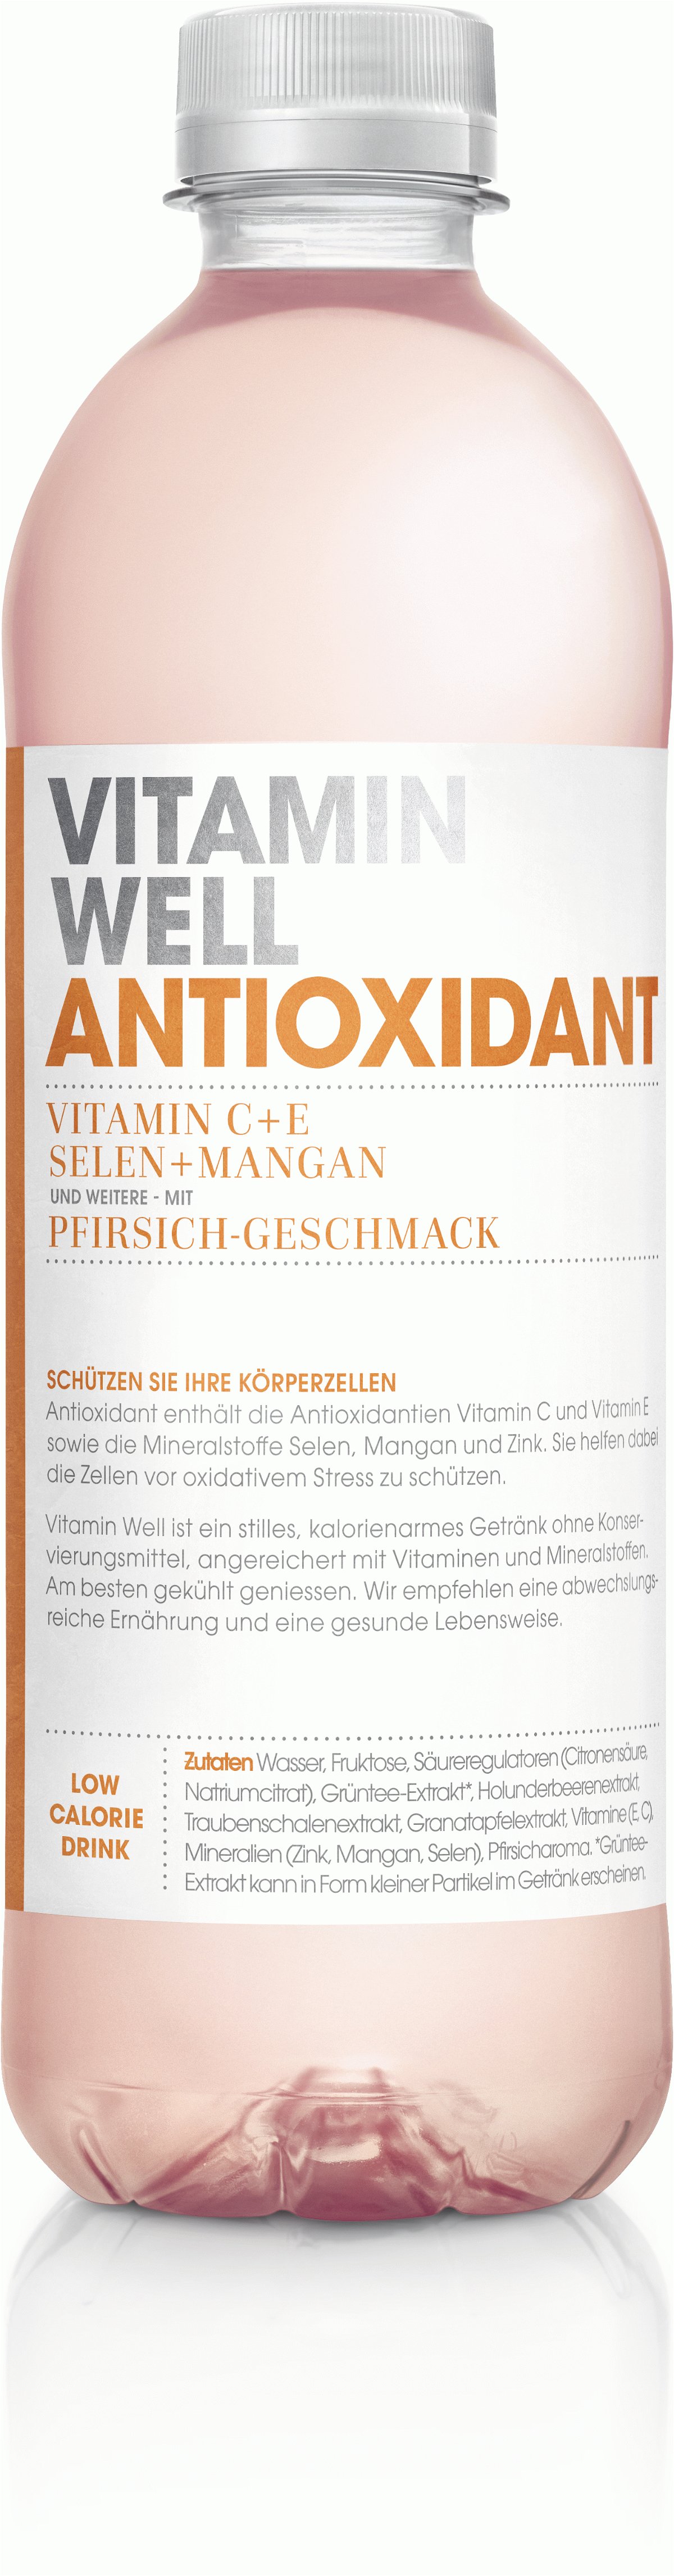 Vitamin Well Antioxidiant